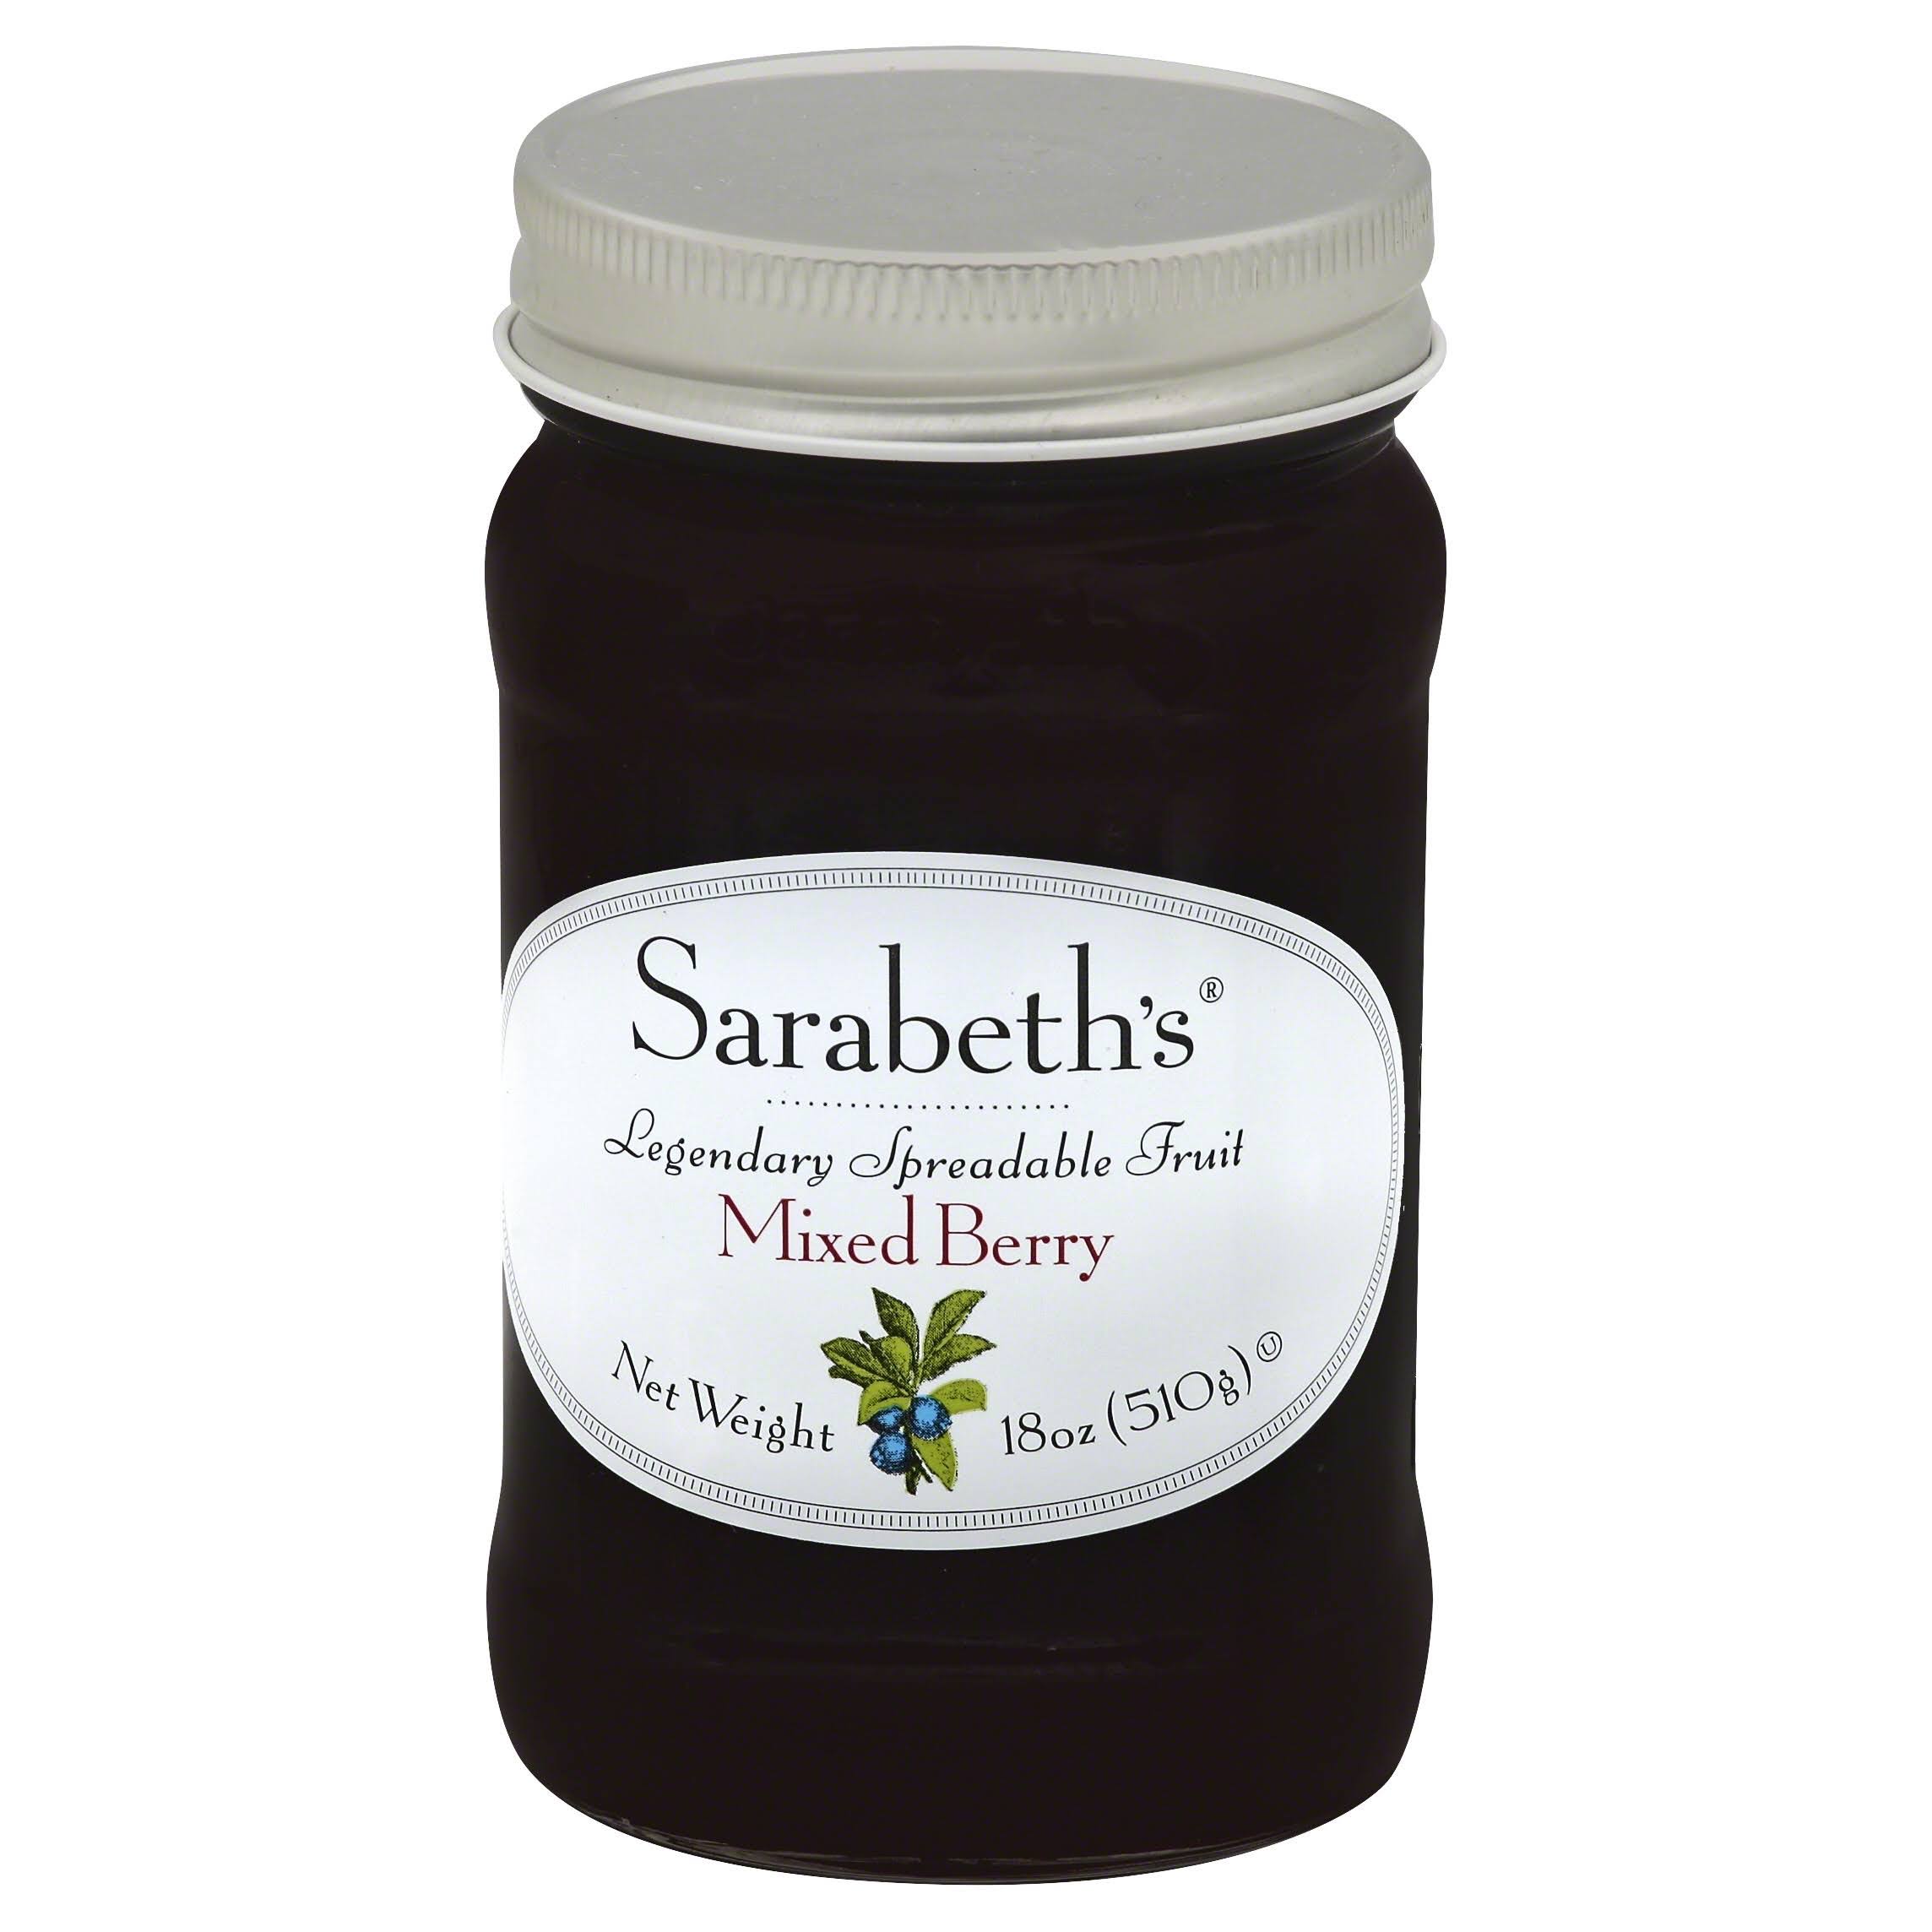 Sarabeth's Legendary Spreadable Fruit Spread - Mixed Berry, 18oz